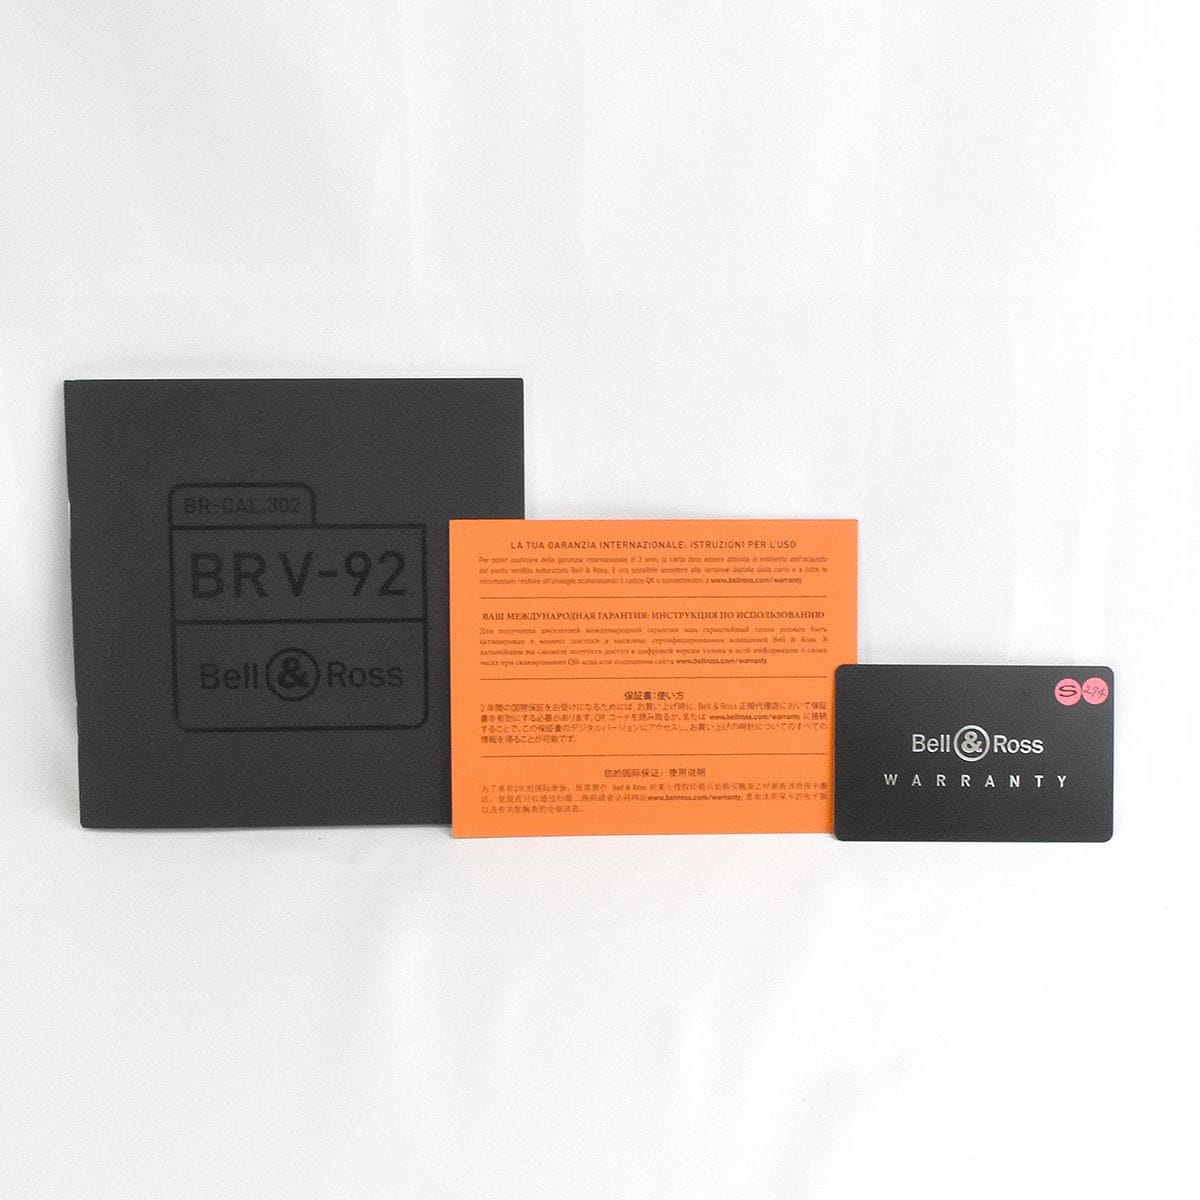 BRV2—92 GARDE—COTES